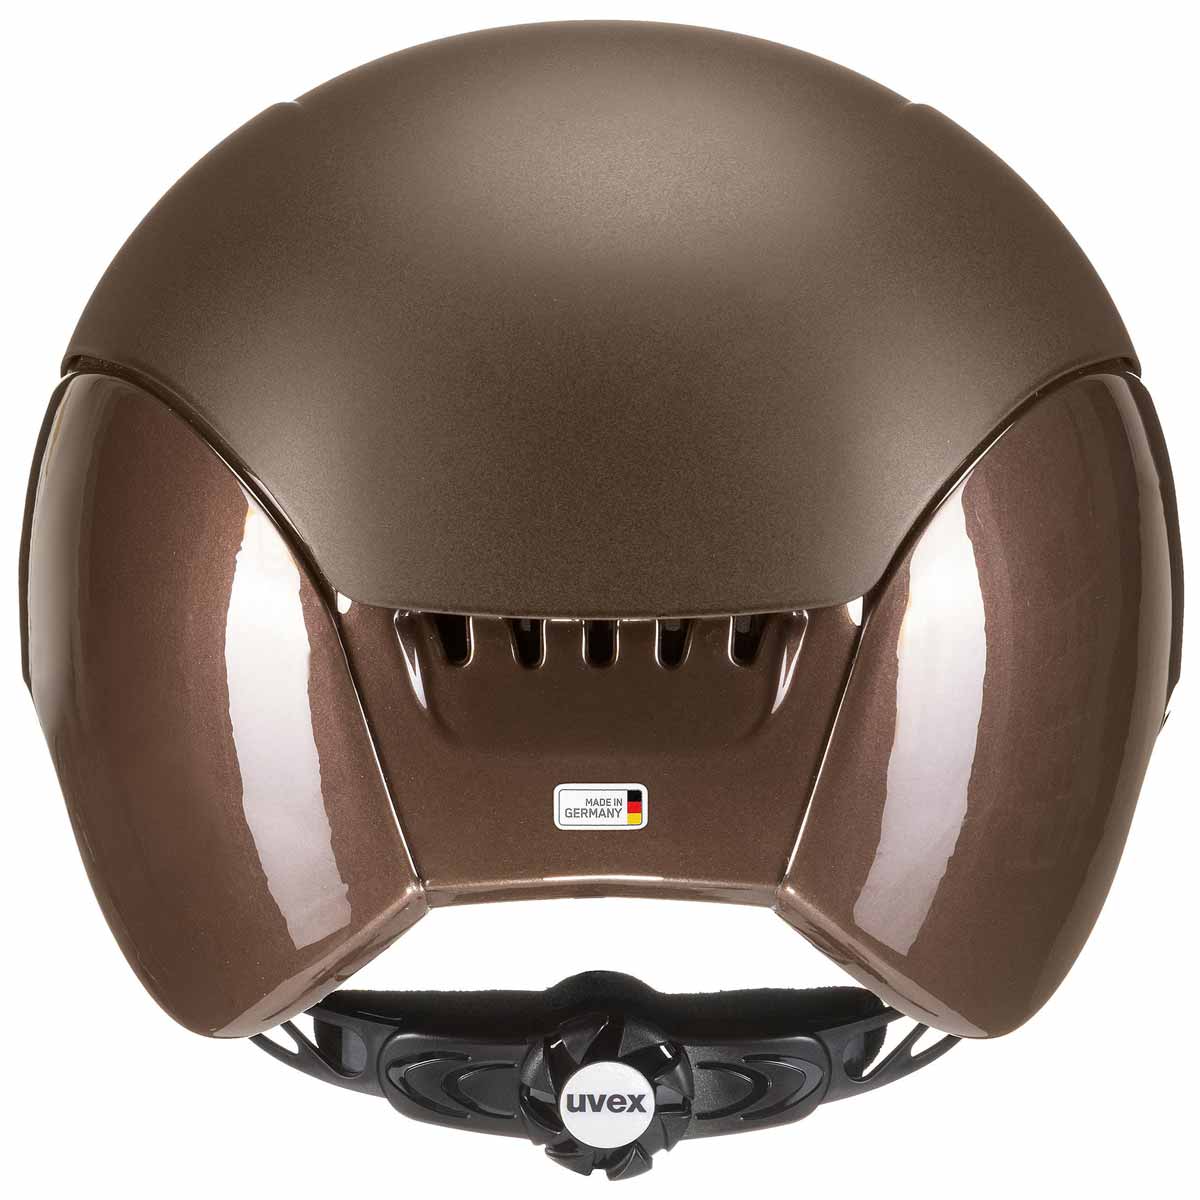 uvex elexxion pro riding helmet blue mat-shiny XS/S